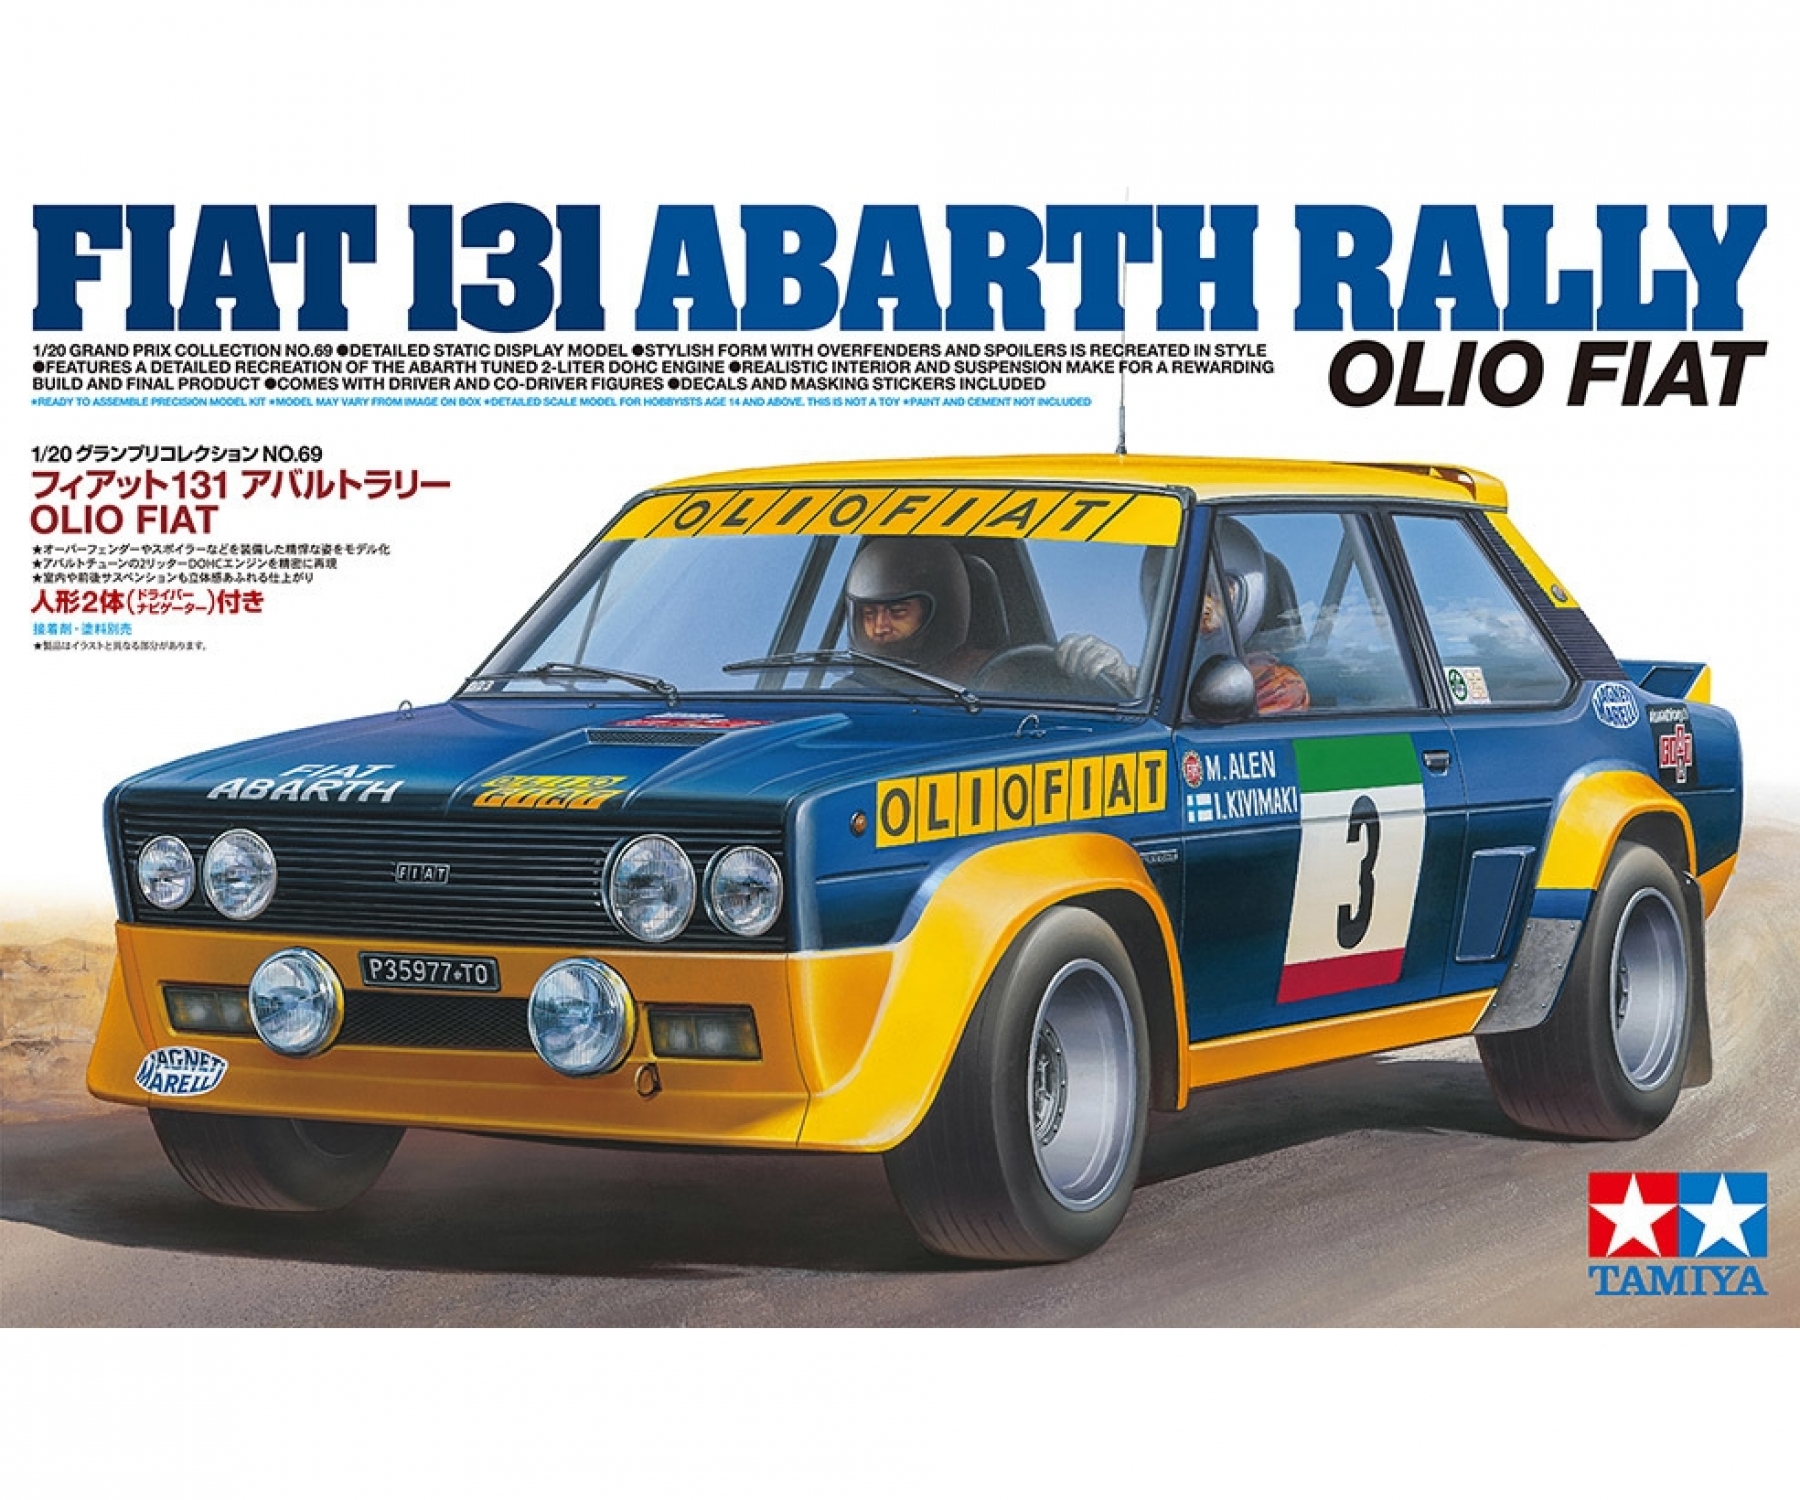 1:20 Fiat 131 Abarth Rally "Olio Fiat"